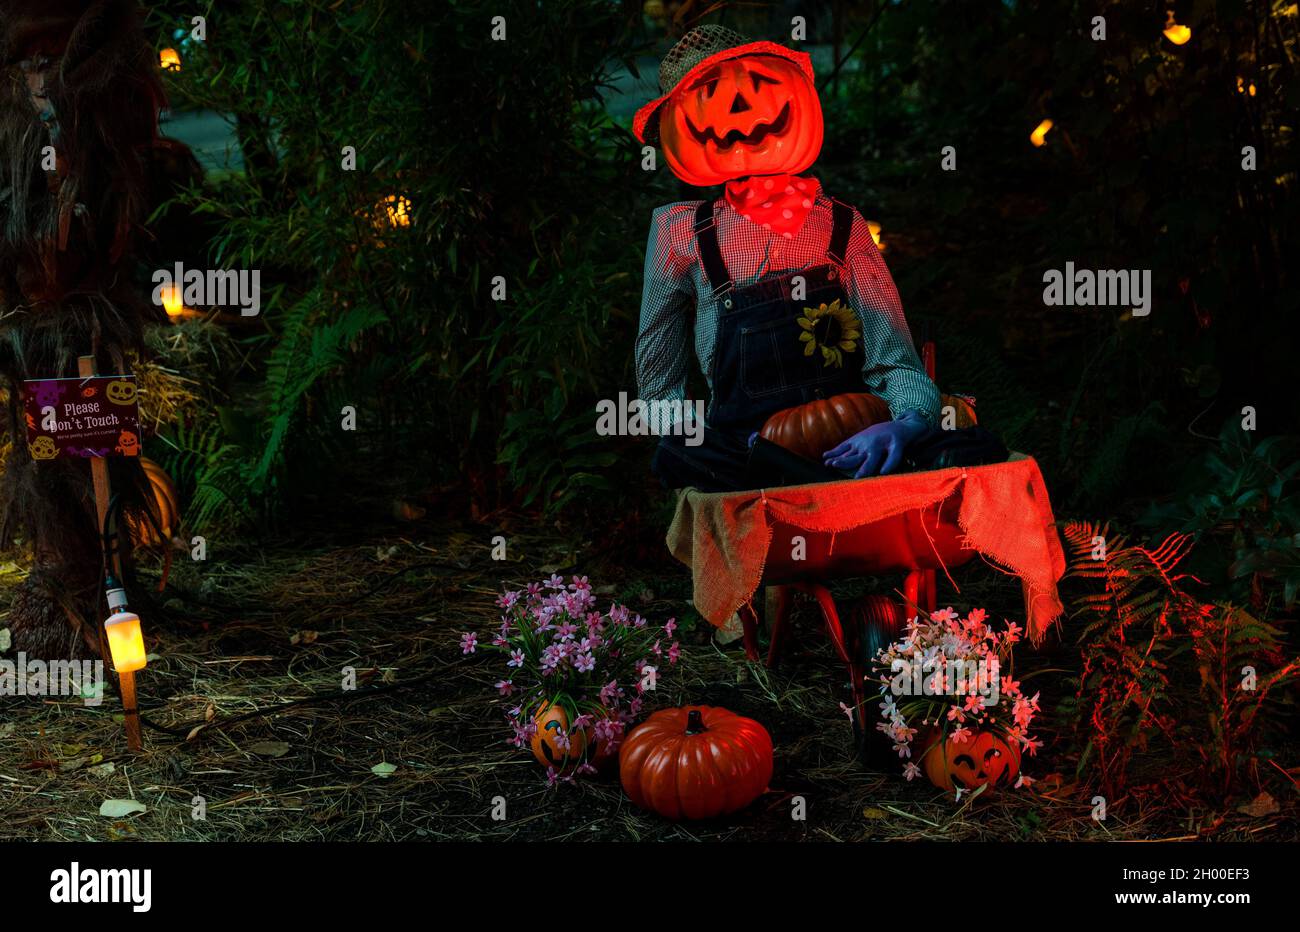 Pumpkin scarecrows in Halloween display at night time, Scotland, UK Stock Photo